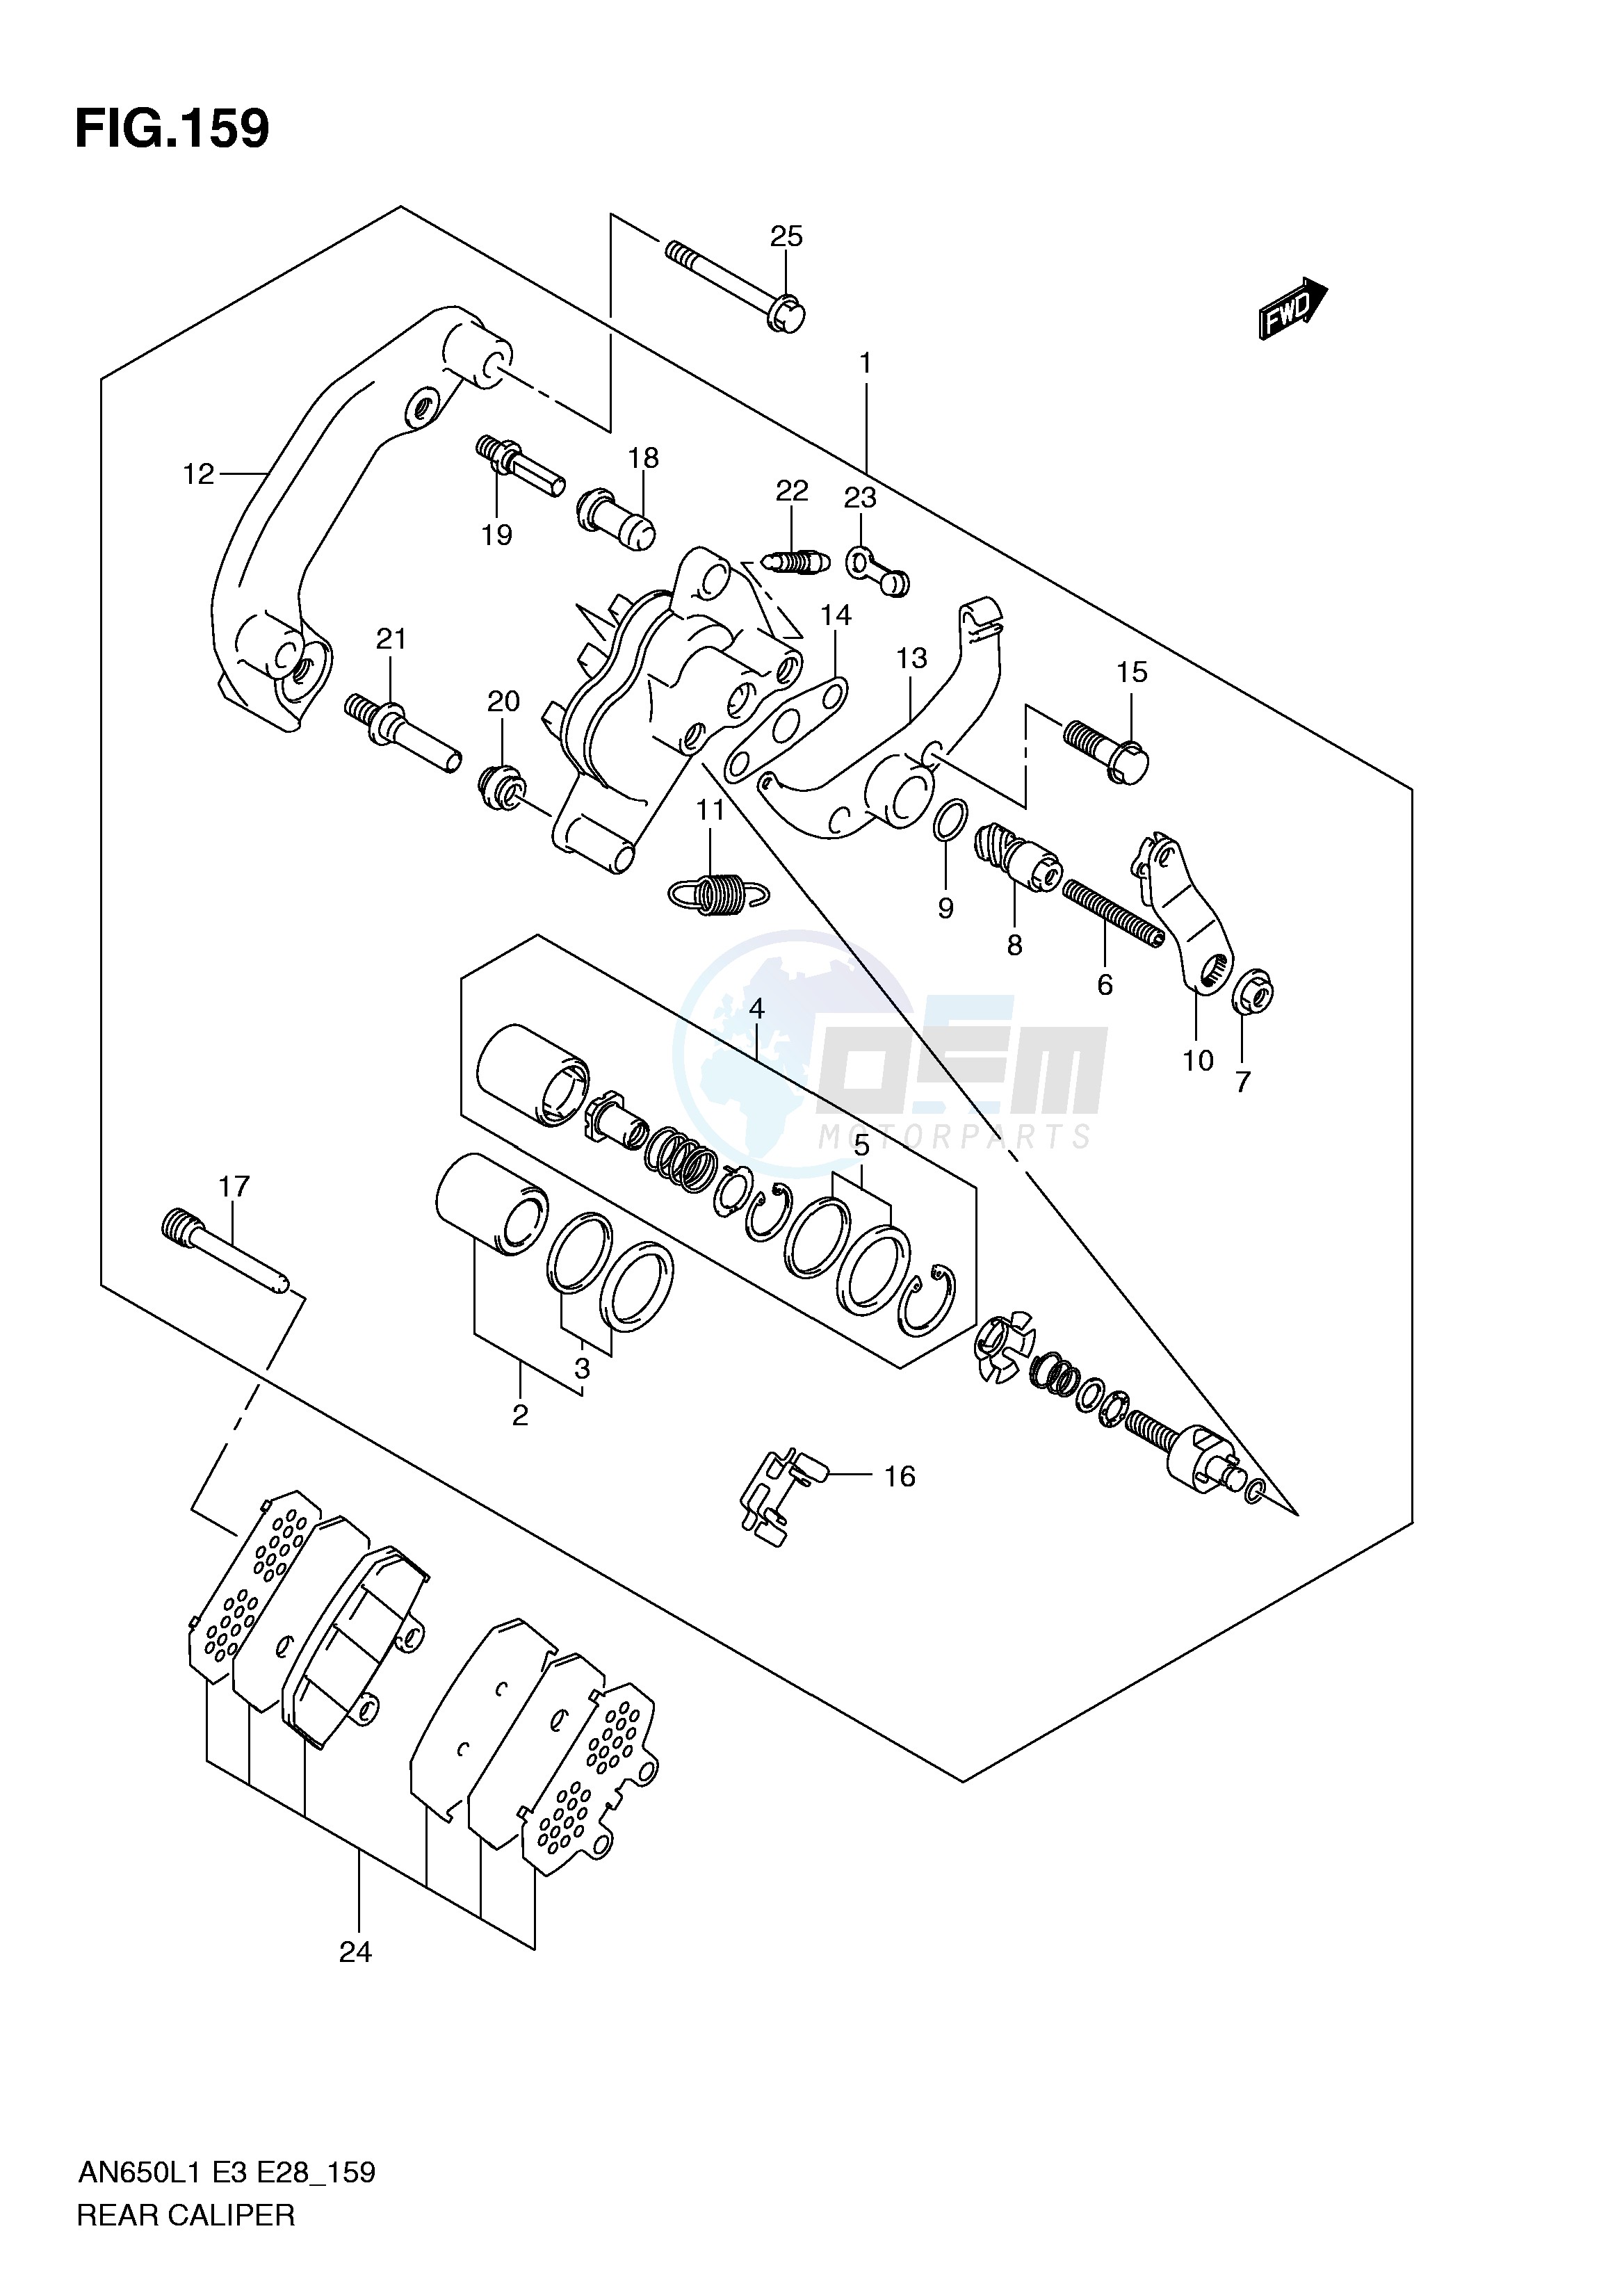 REAR CALIPER (AN650AL1 E33) blueprint